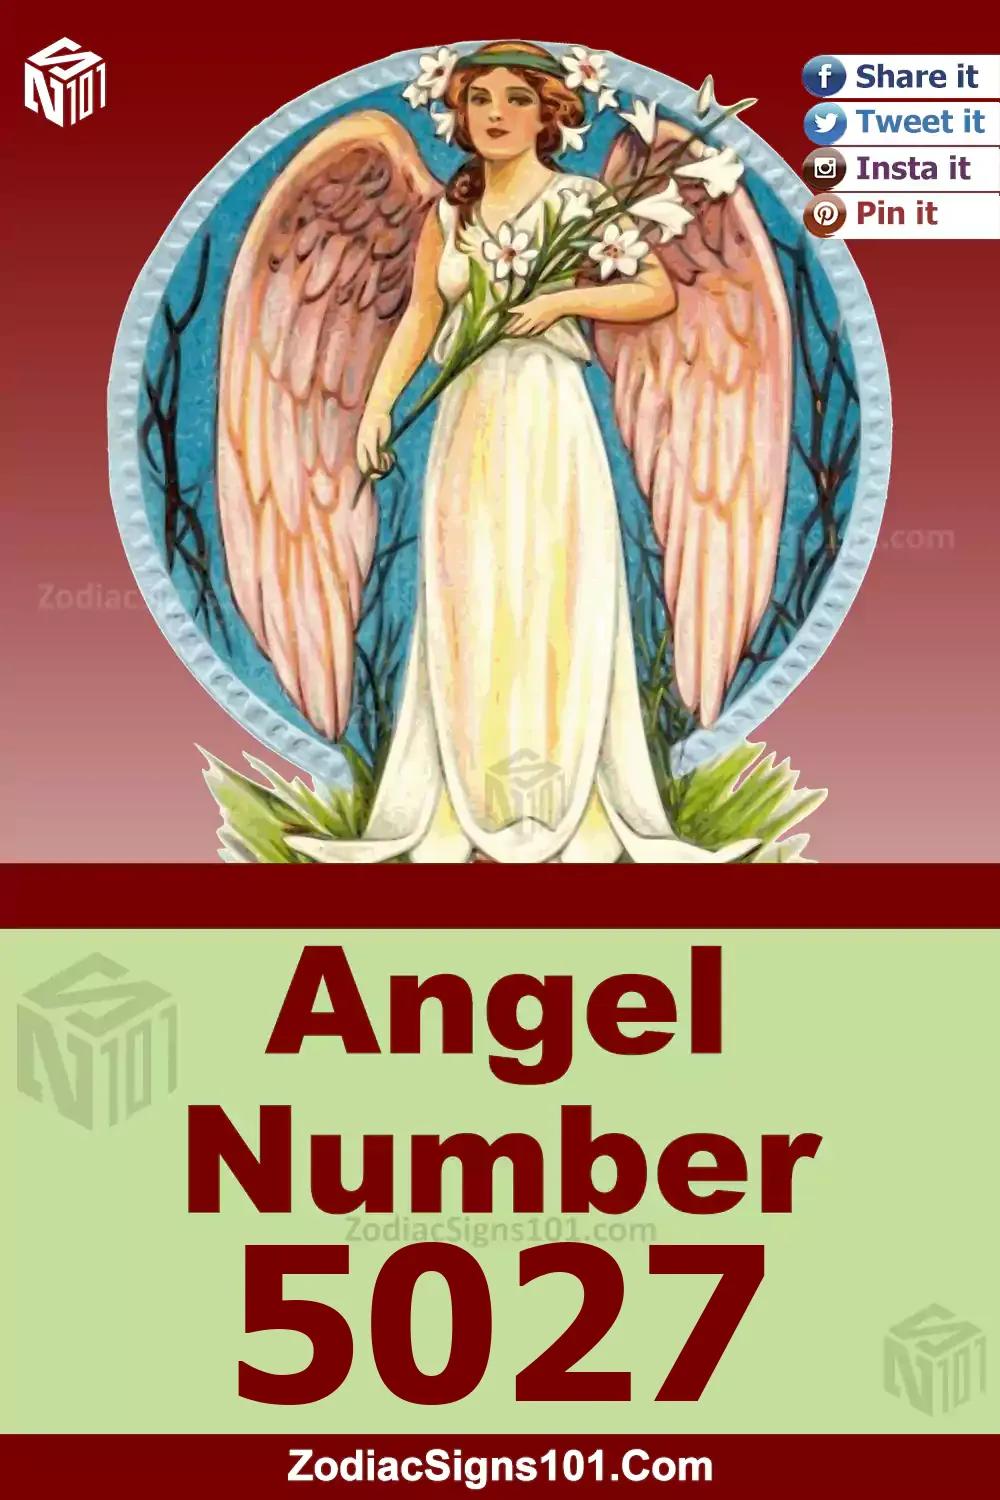 5027-Angel-Number-Meaning.jpg